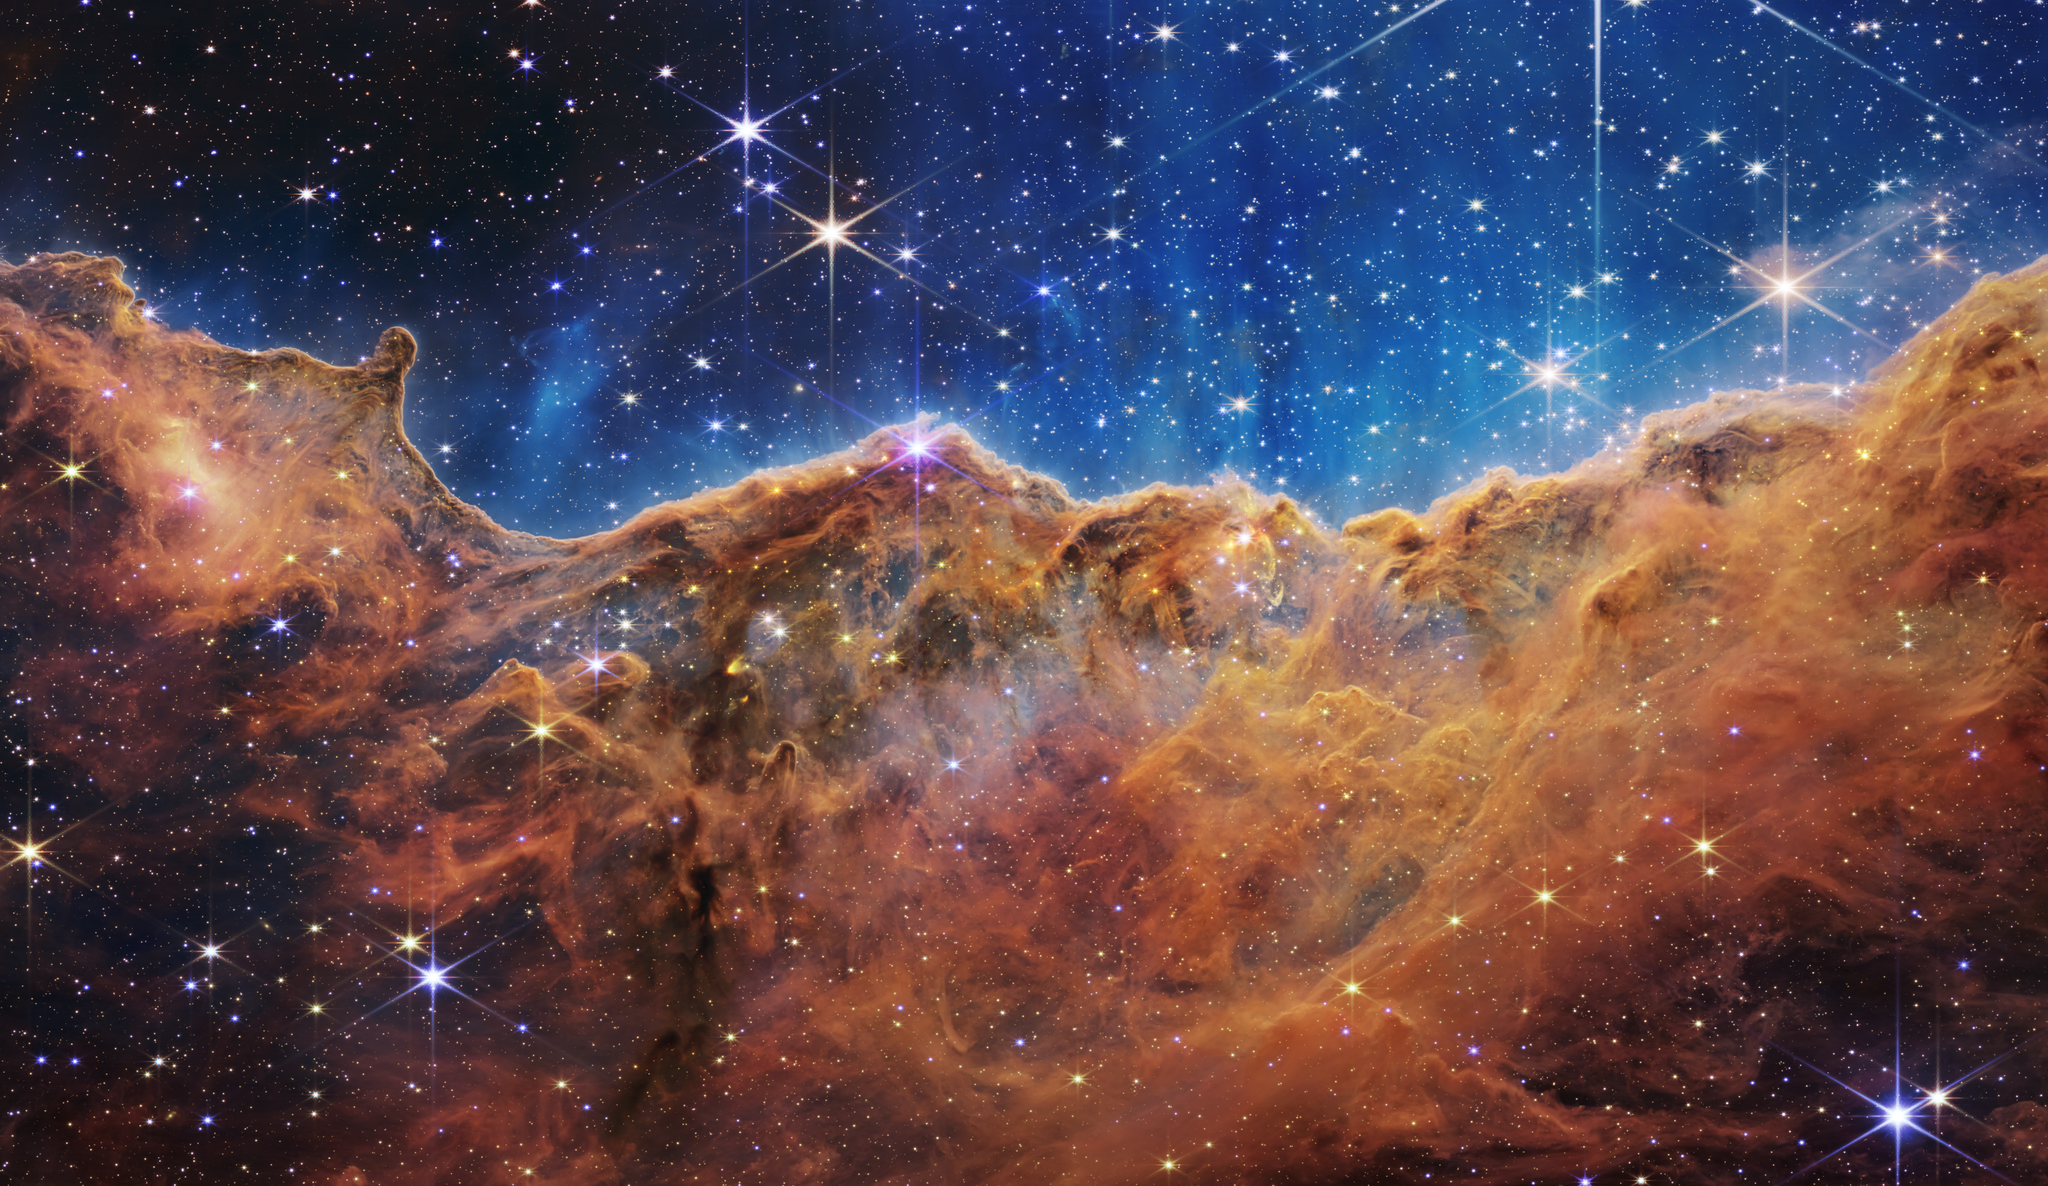 Webb Reveals the Carina Nebula